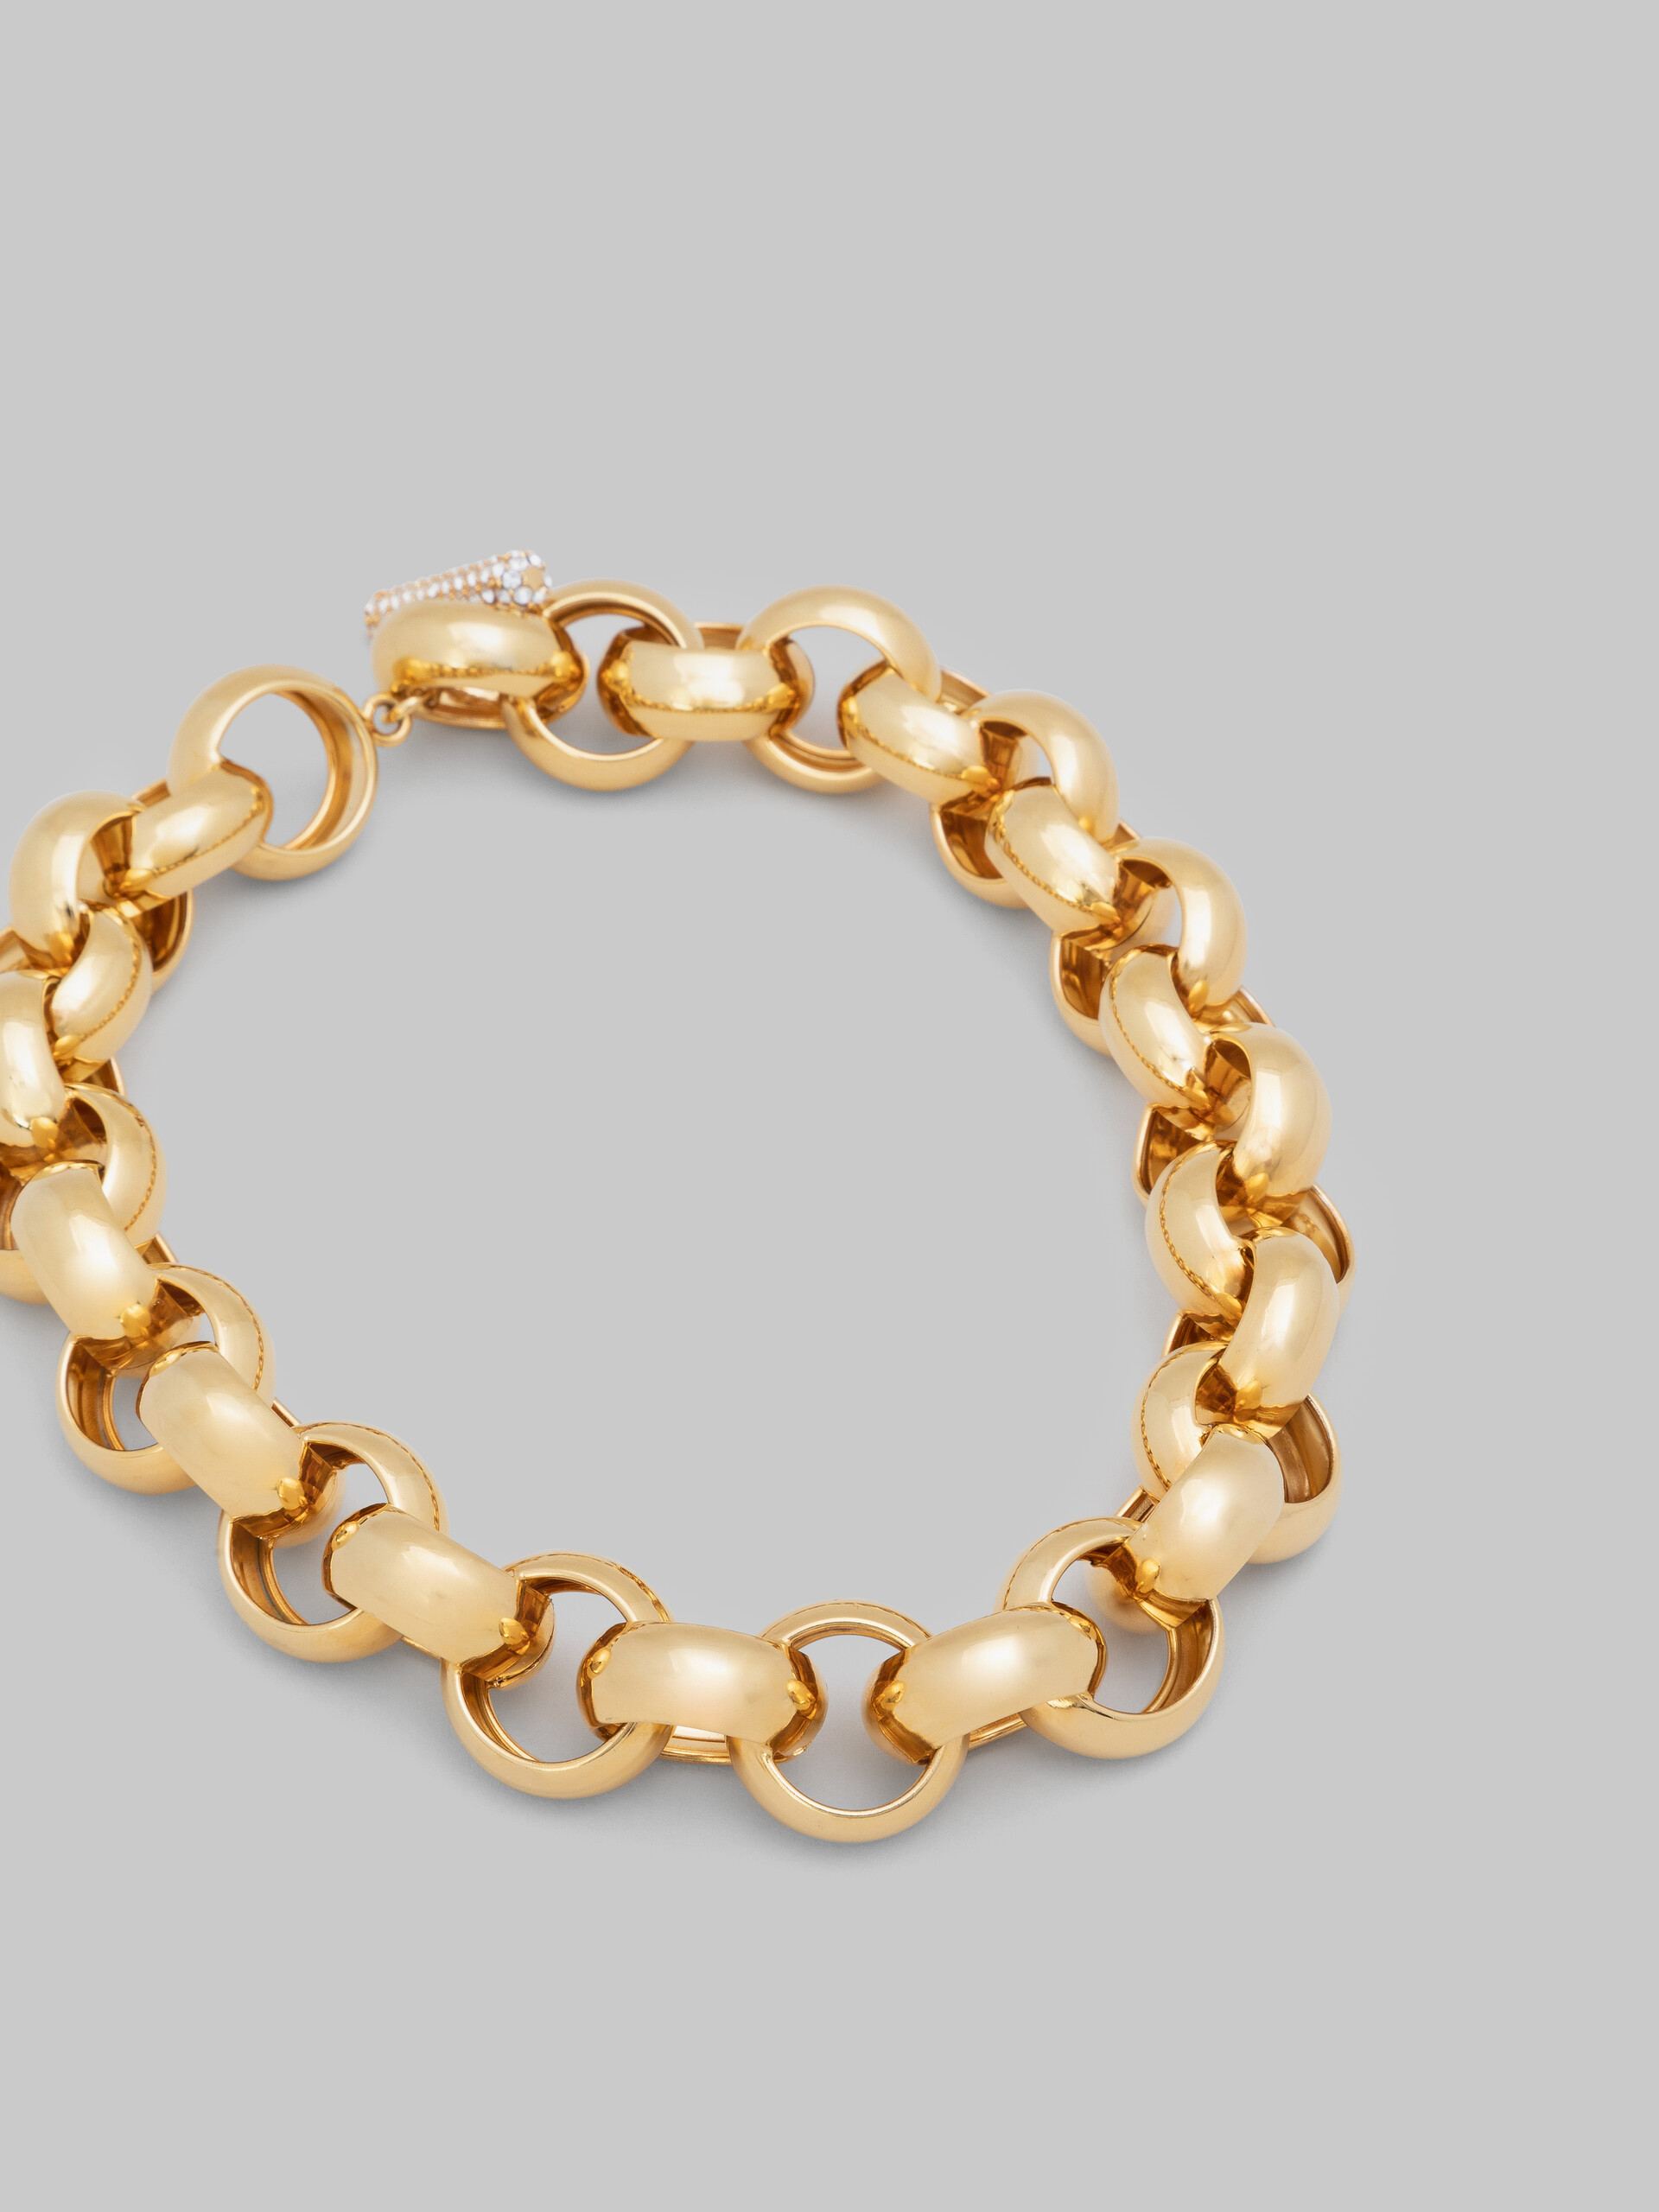 Palladium ring choker with rhinestone clasp - Necklaces - Image 3